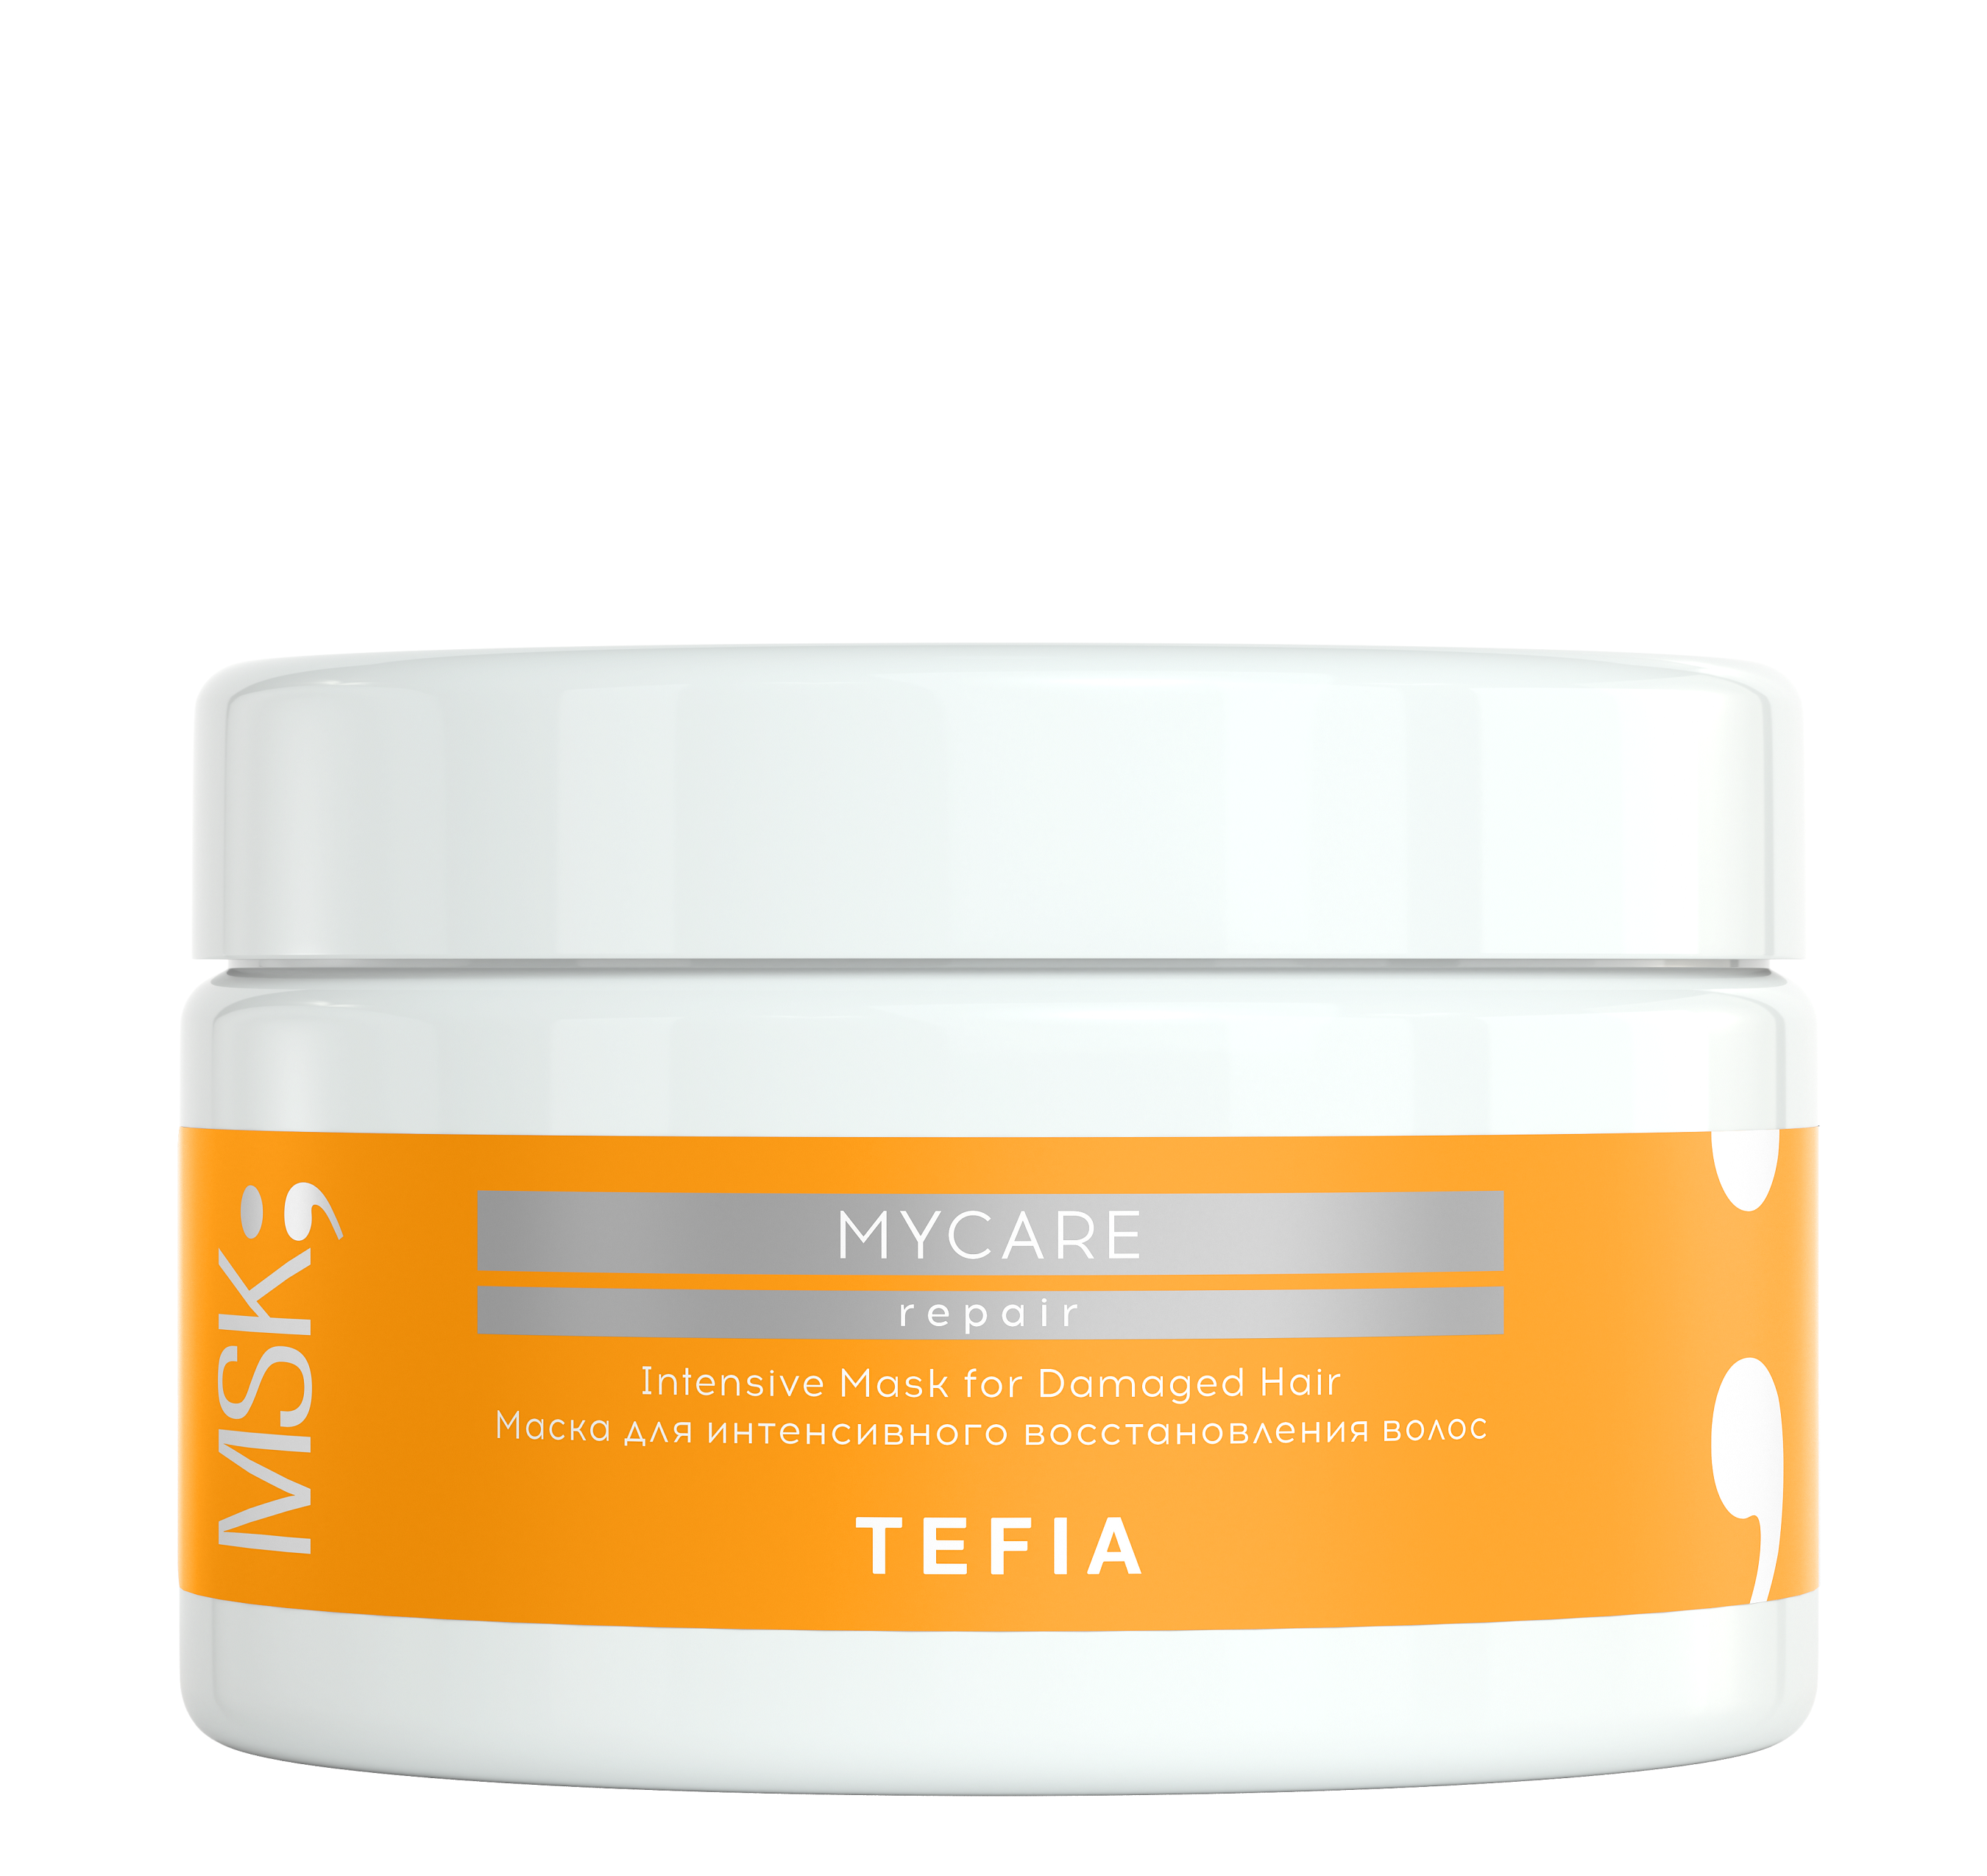 TEFIA Маска для интенсивного восстановления волос / Mycare REPAIR 250 мл маска для объема с экстрактом ягод асаи numero volume b080167 1000 мл